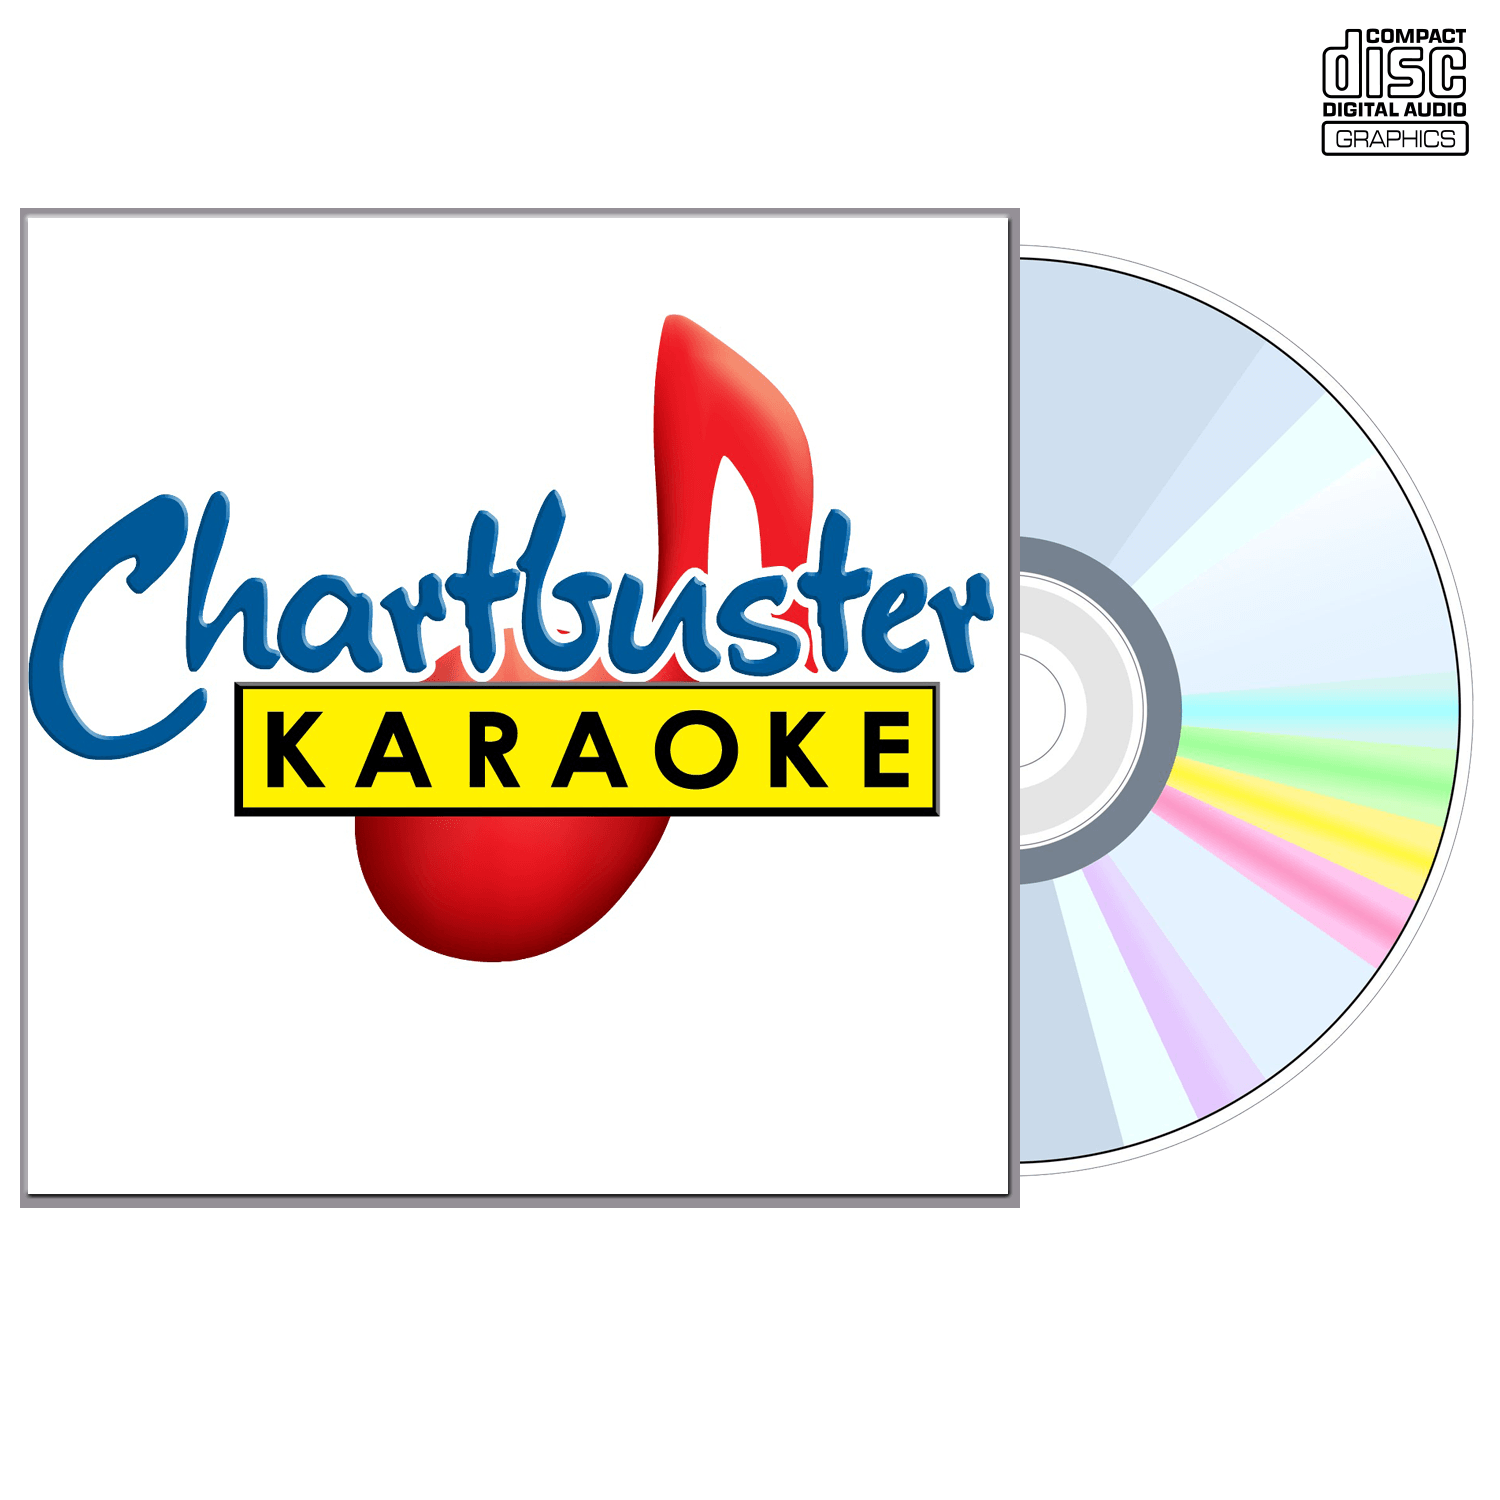 Country Mix Vol 04 - CD+G - Chartbuster Karaoke - Karaoke Home Entertainment